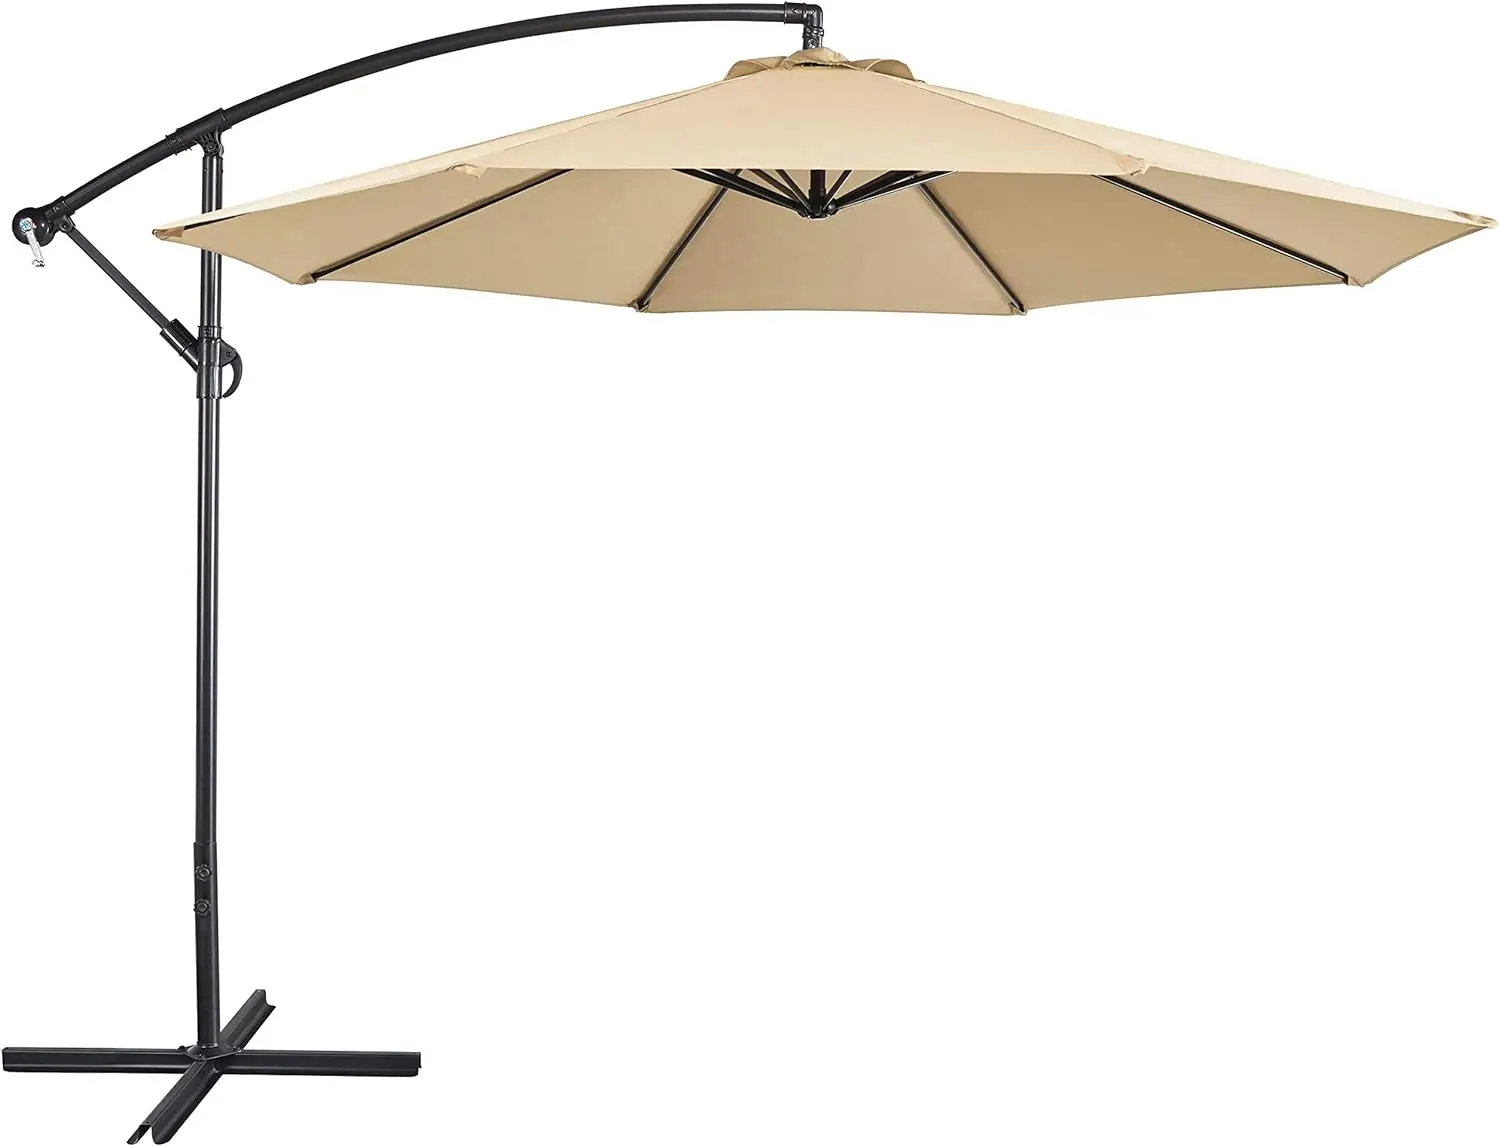 

10FT Patio Offset Umbrella - Cantilever Hanging Outdoor Umbrellas w/UV Protection & 8 Ribs & Handy Crank & Cross Base